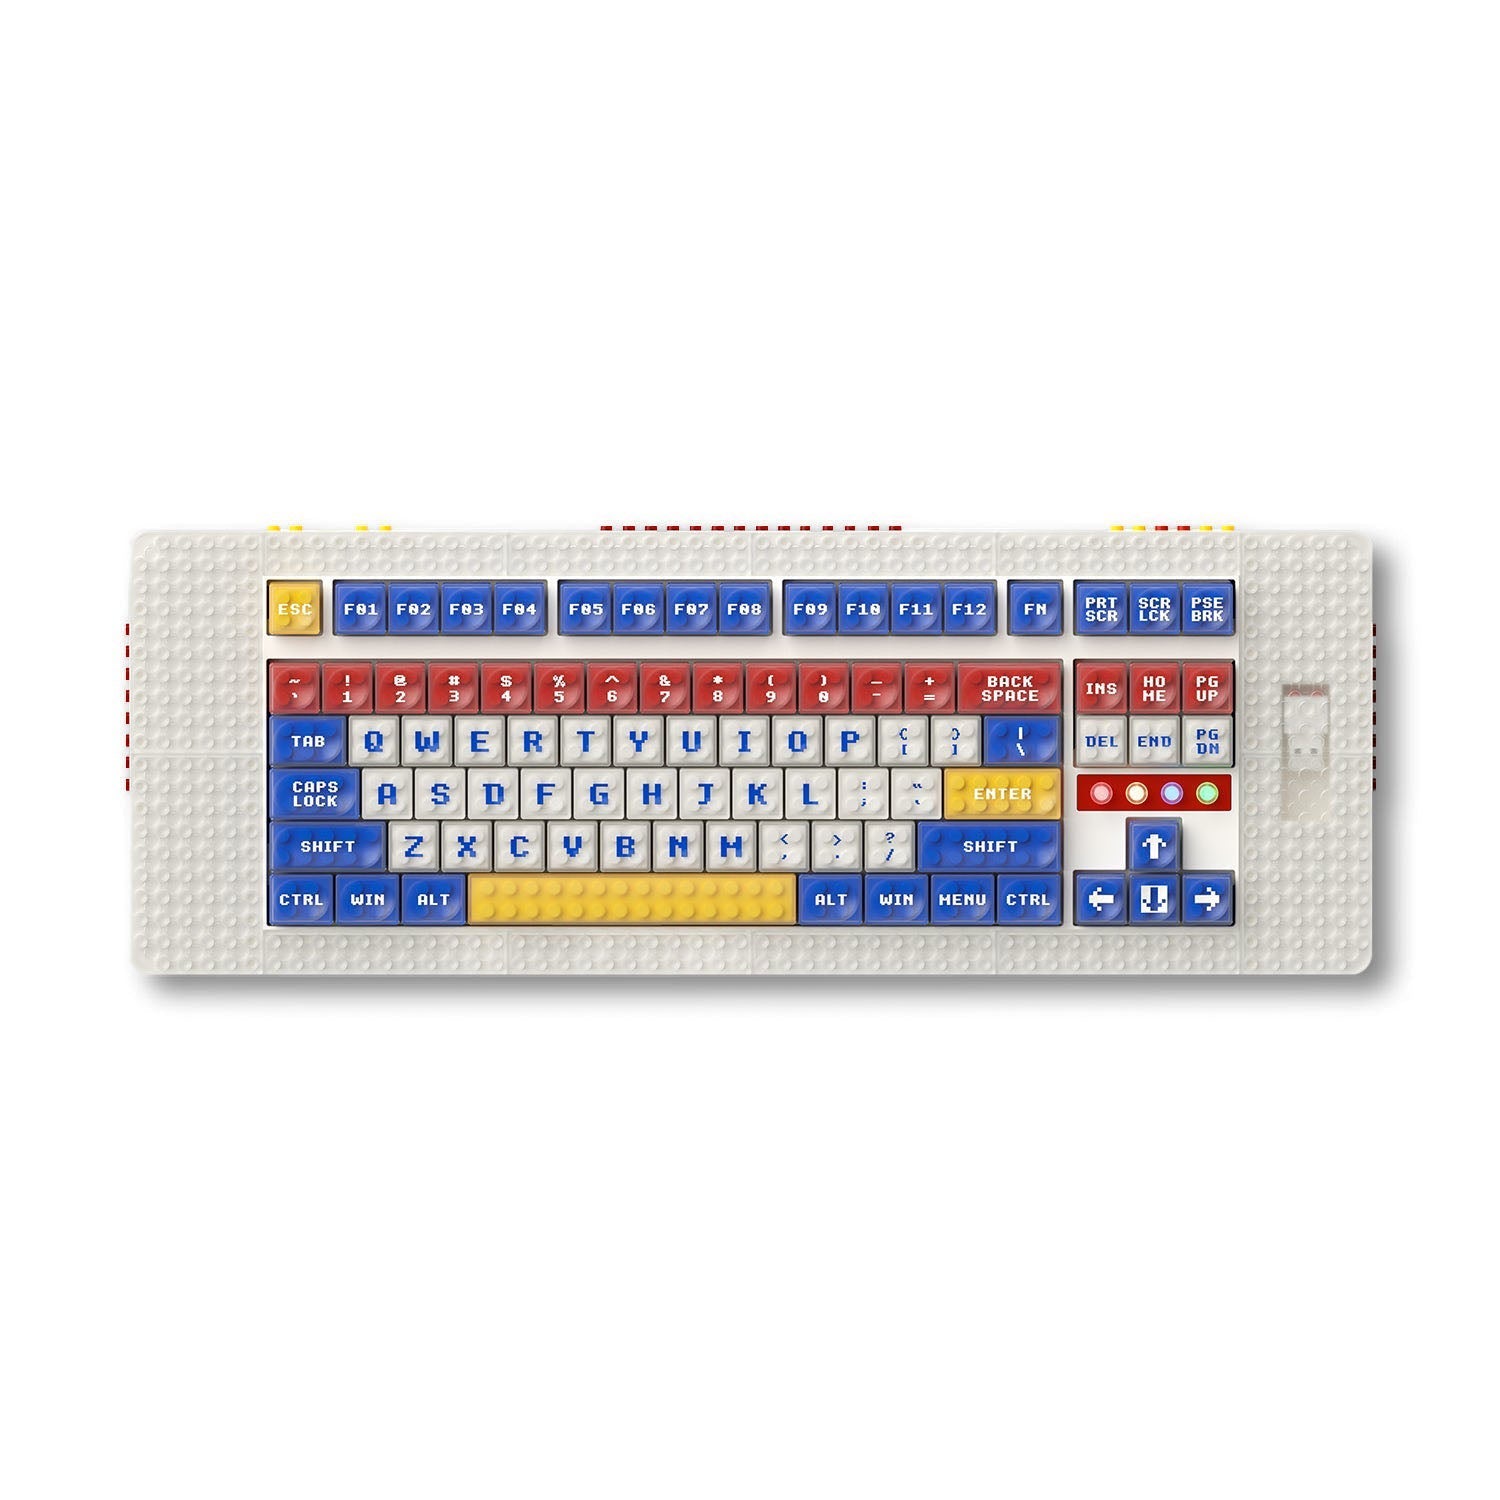 MelGeek Pixel Palette, World's First Brick-compatible Custom Mechanical Keyboard